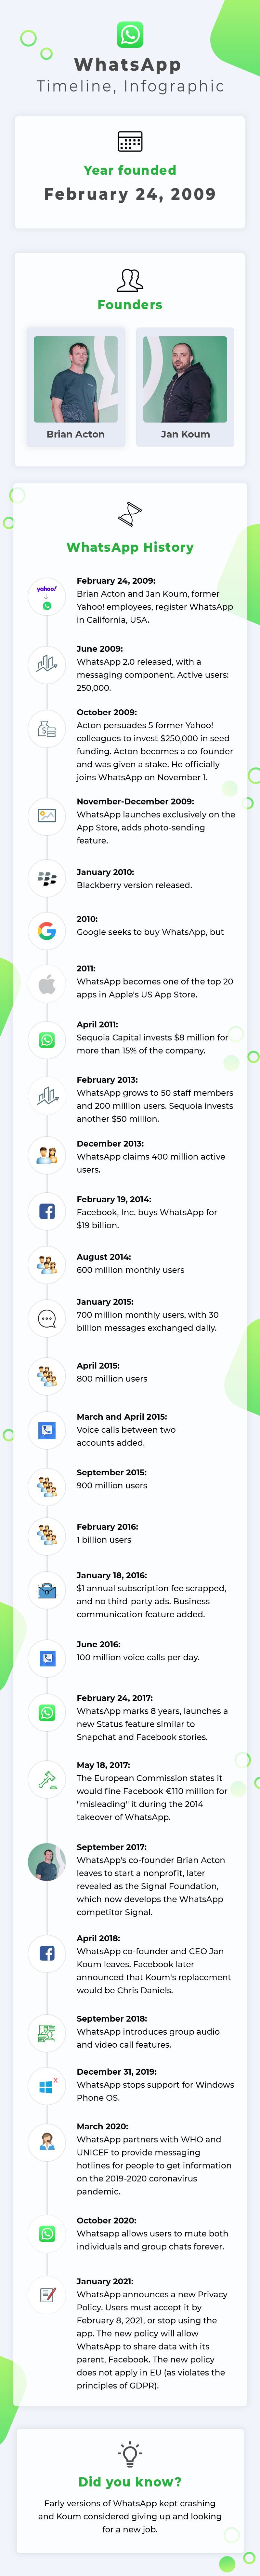 Whatsapp timeline